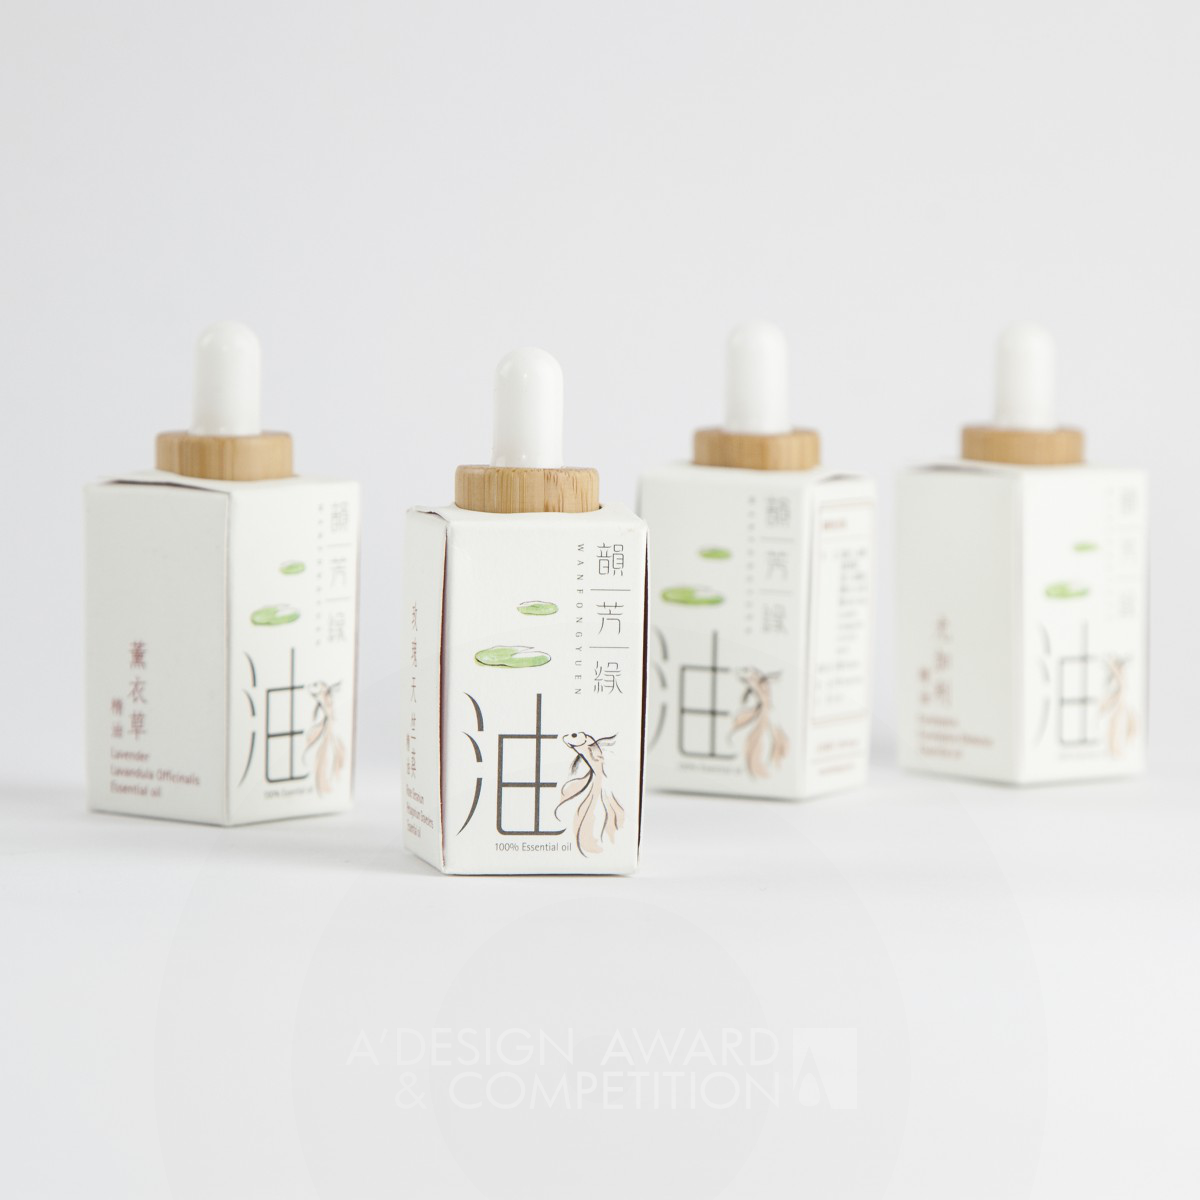 Wan Fong Yuen  natural handmade skincare brand by The Box Brand Design Ltd.